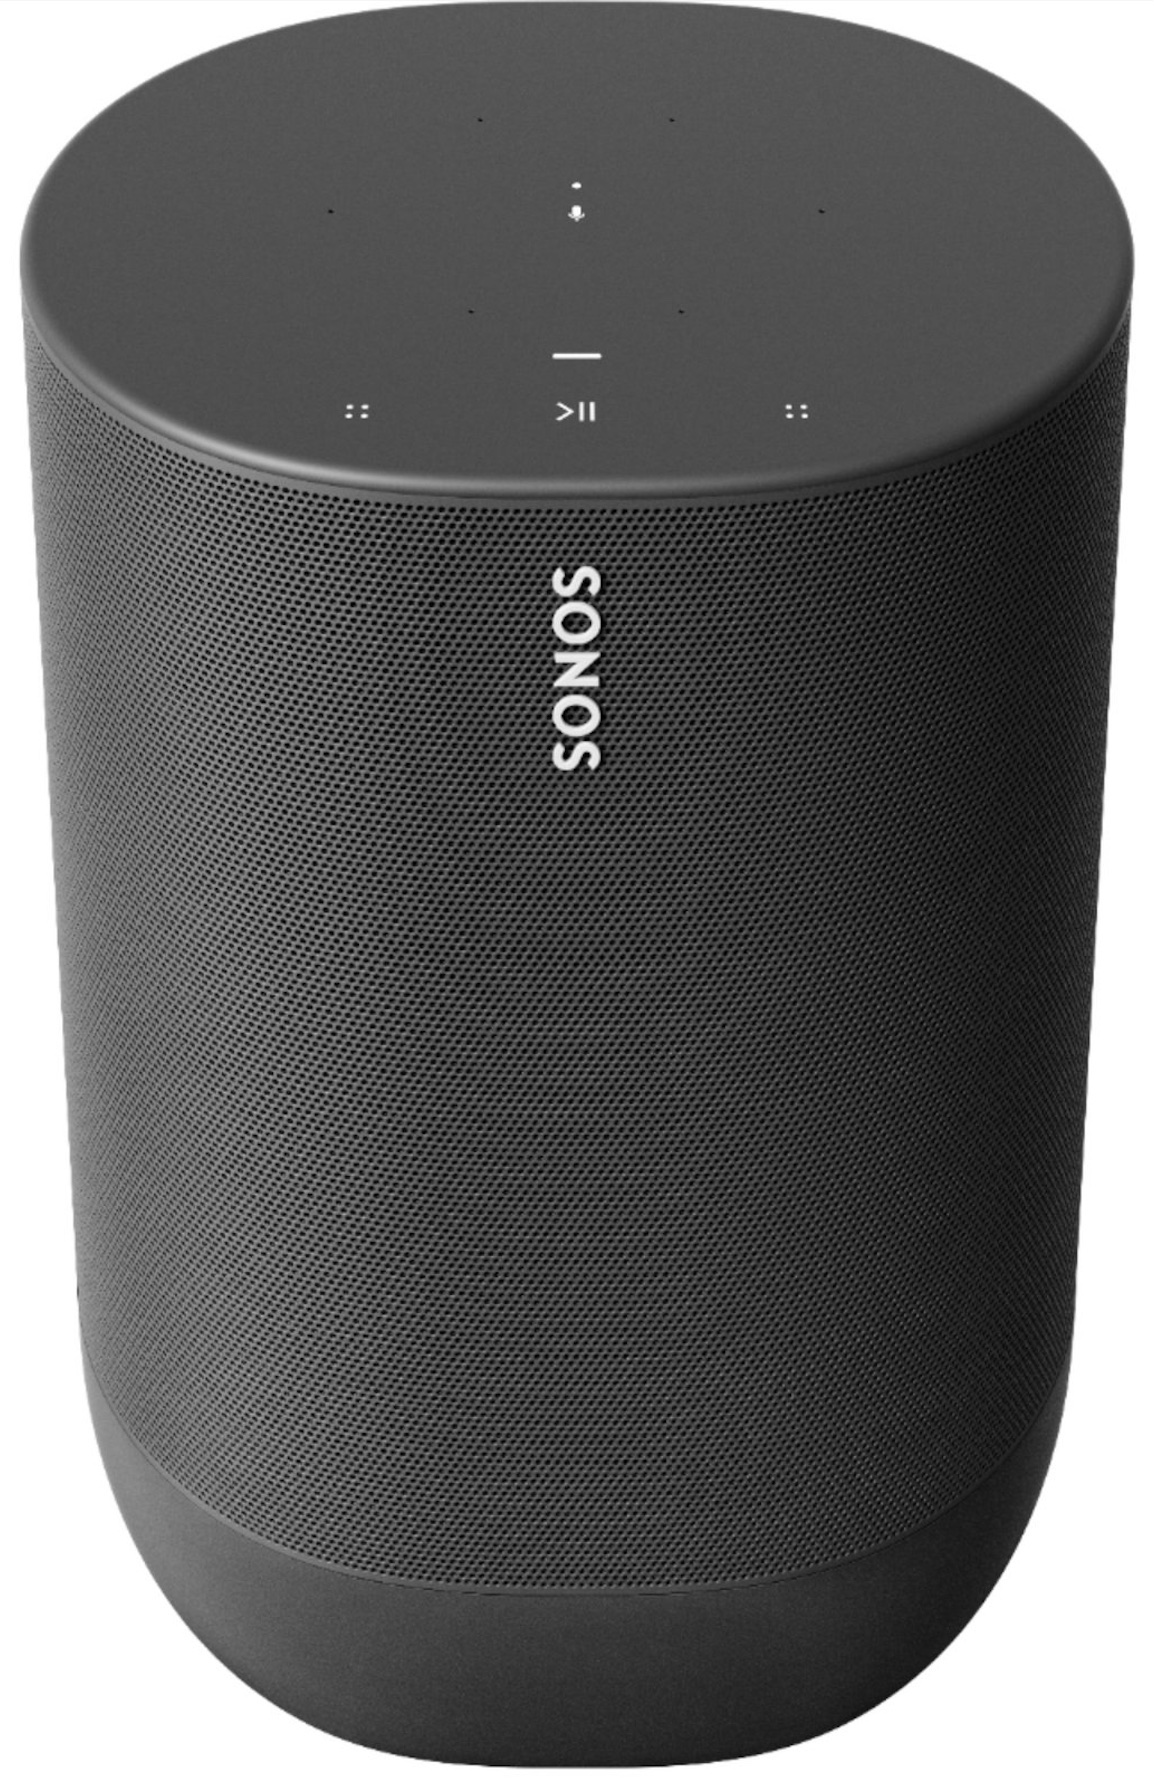 Sonos plant Bluetooth-Lautsprecher